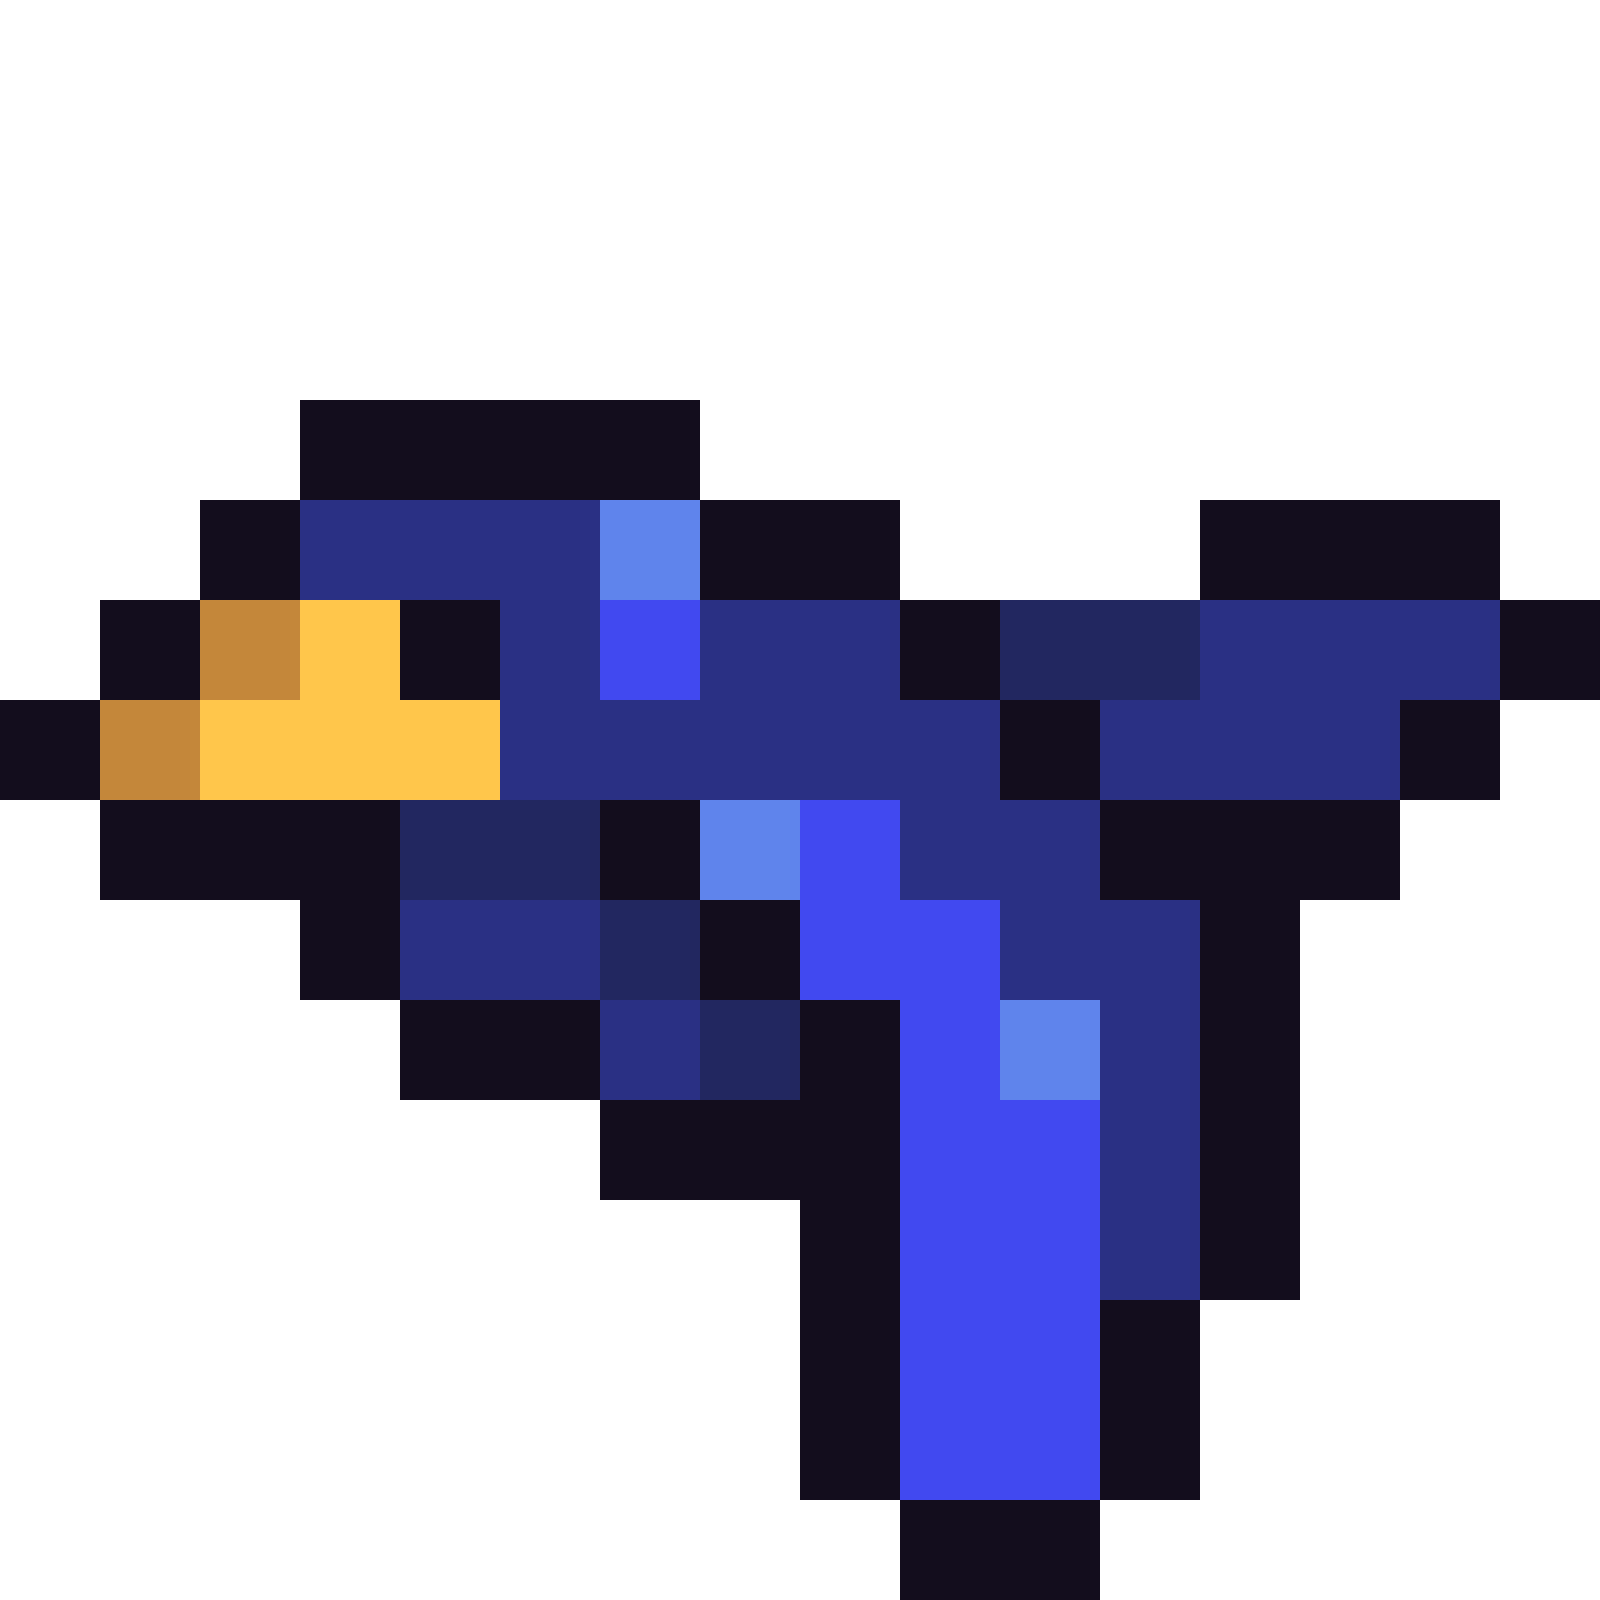 bird pixel art grid easy Flappy bird pixel art – brik - Pixel Art Grid